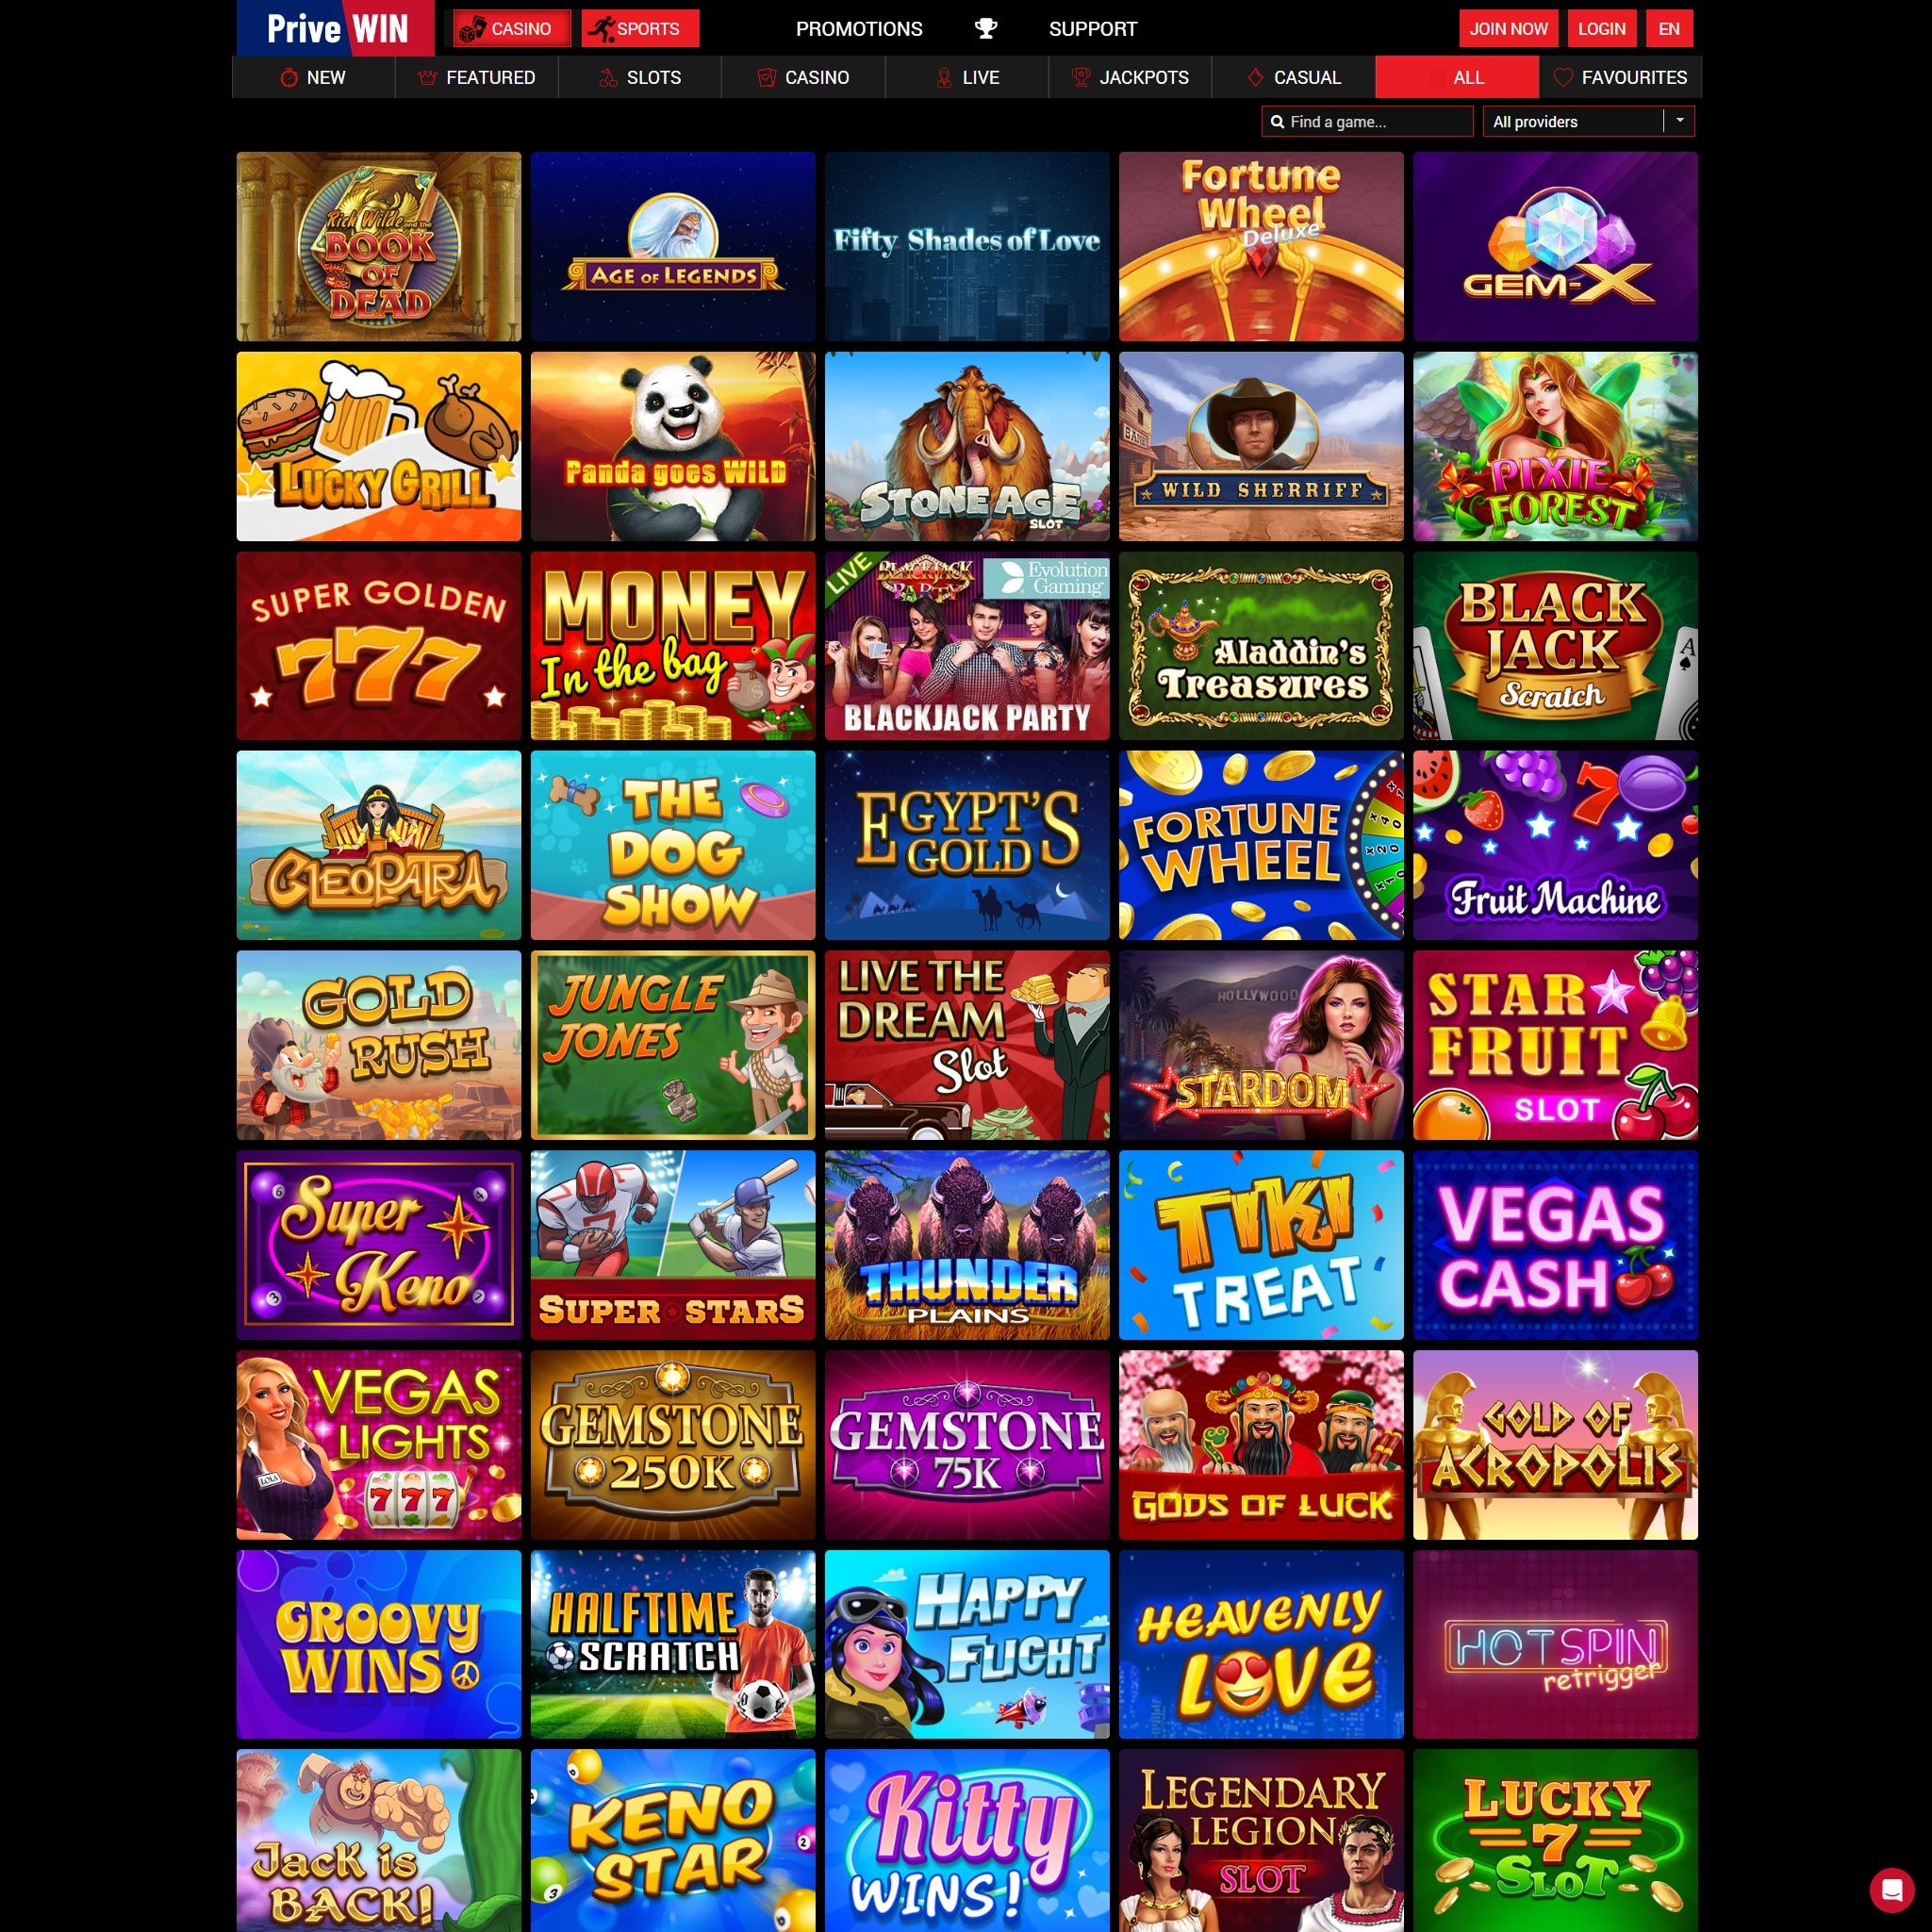 Privewin Casino full games catalogue